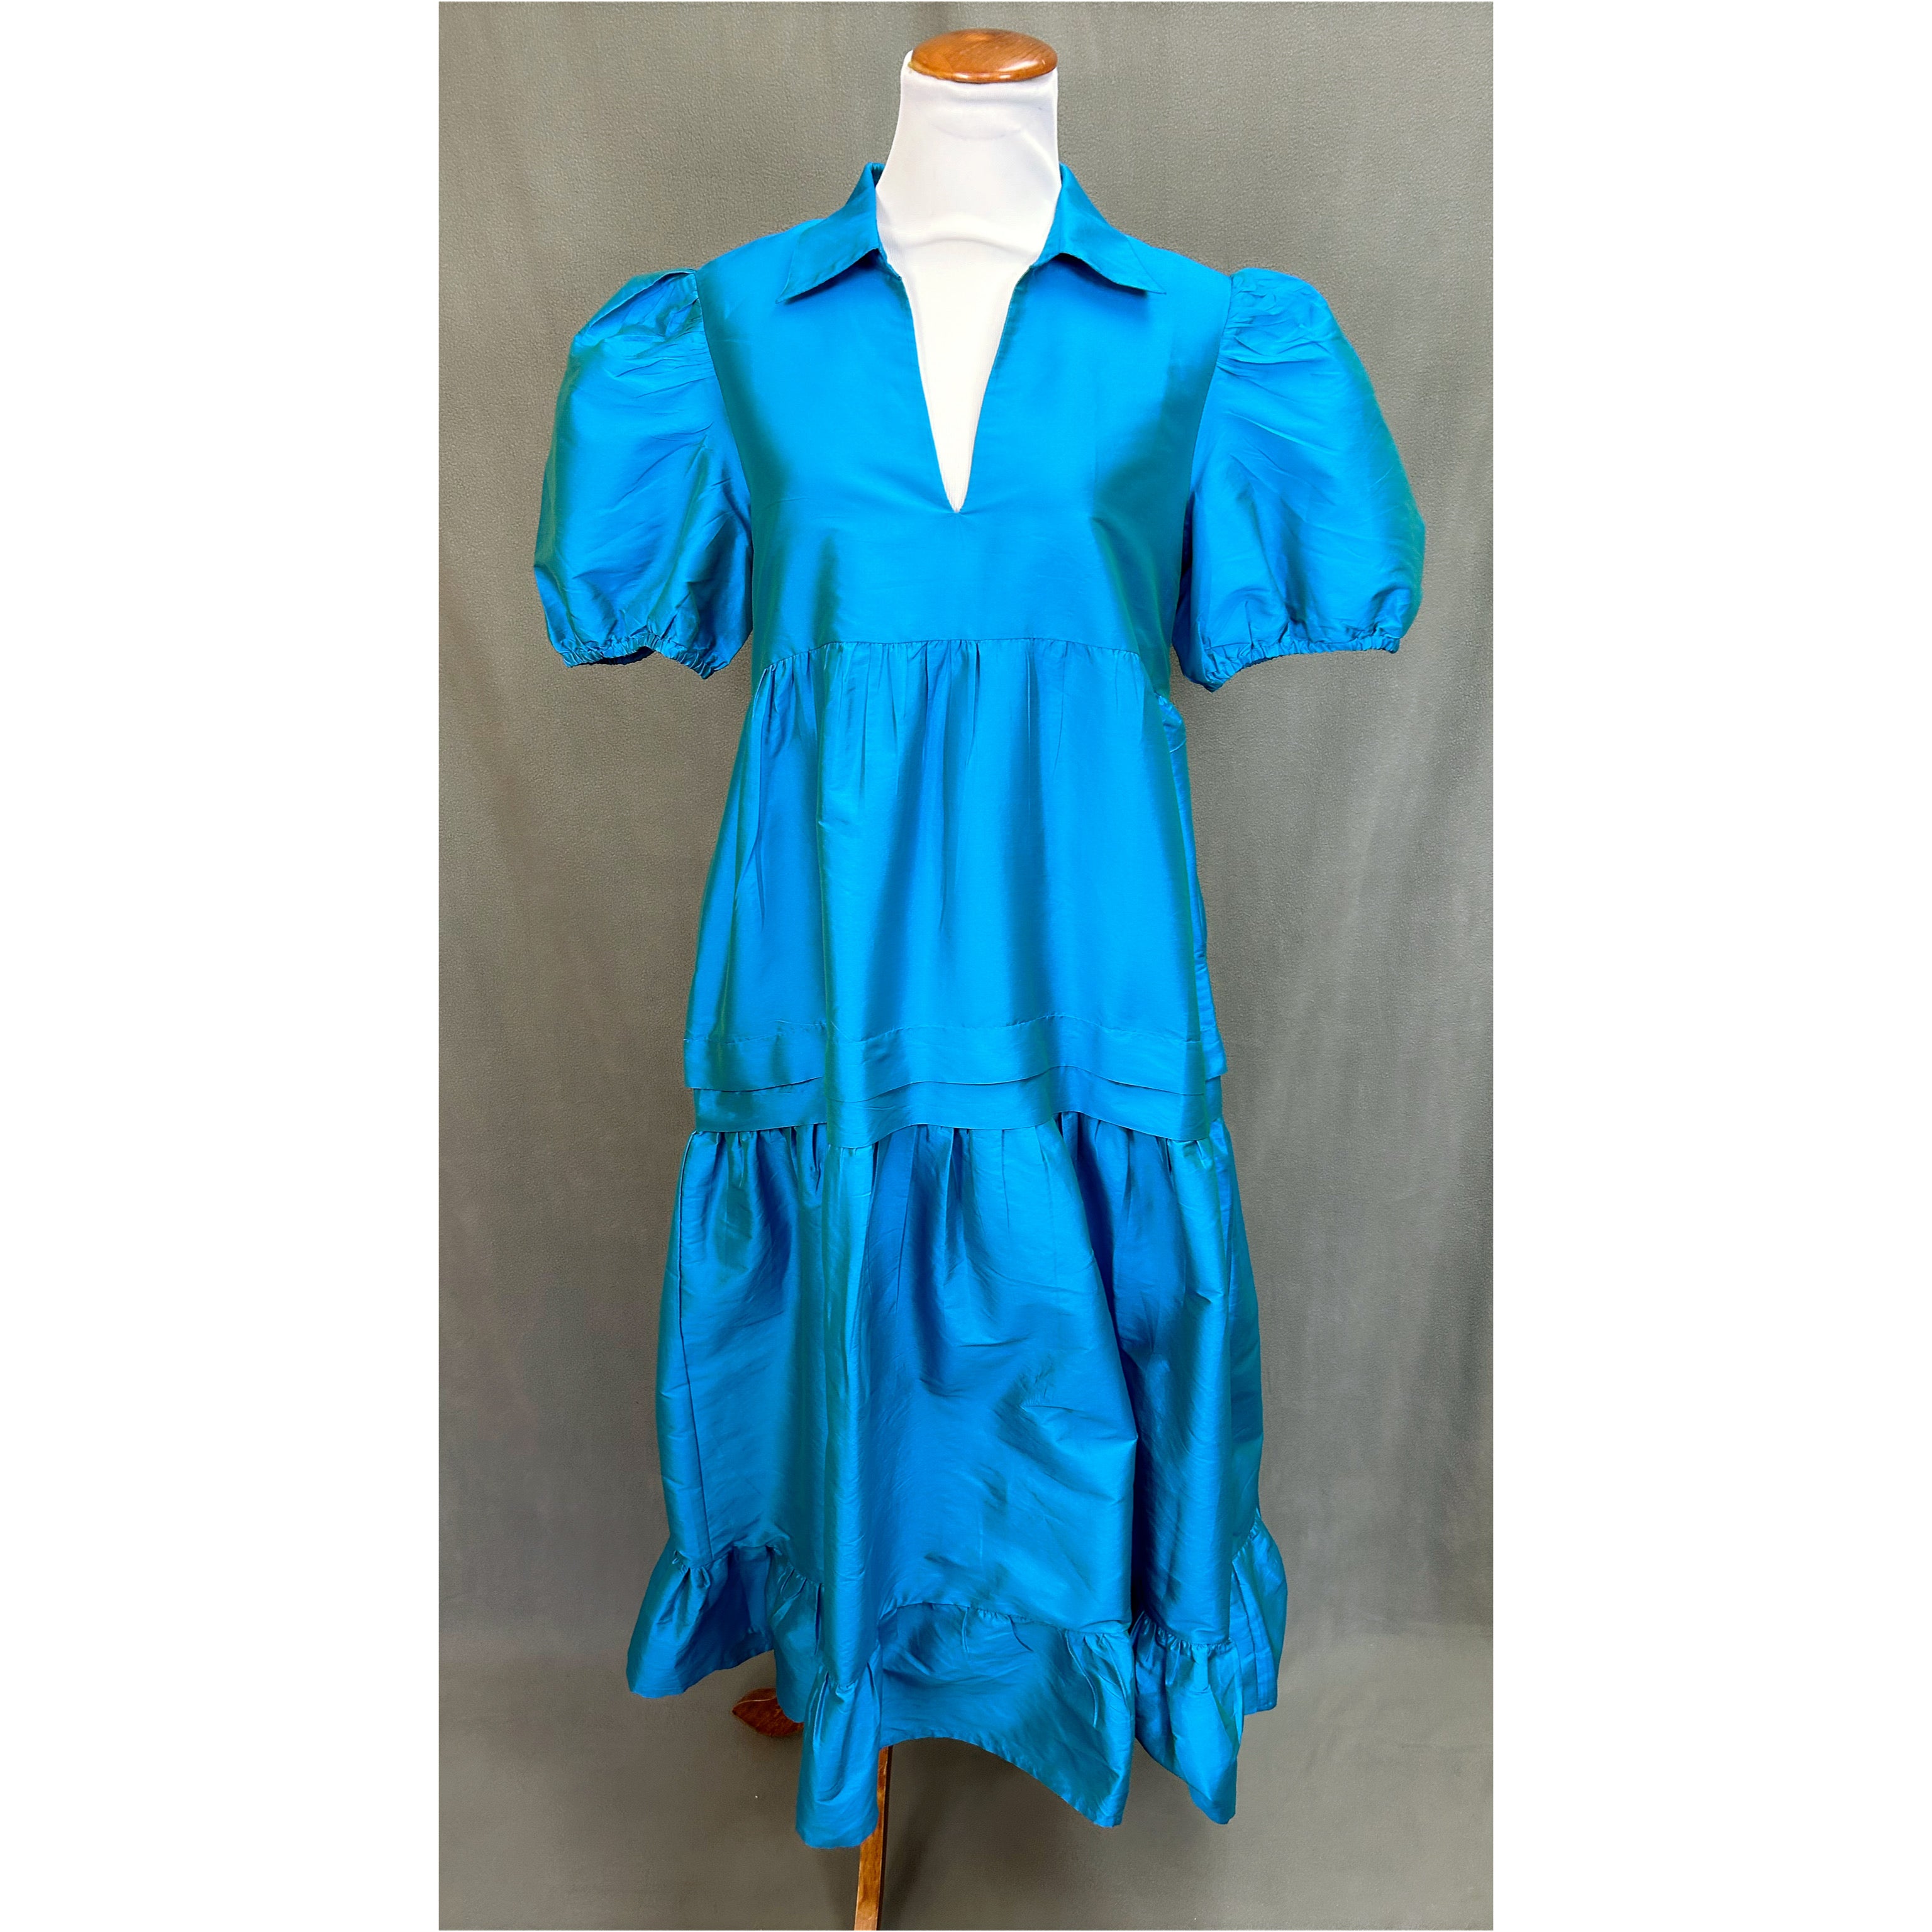 Dhruv Kapoor peacock blue dress, size S